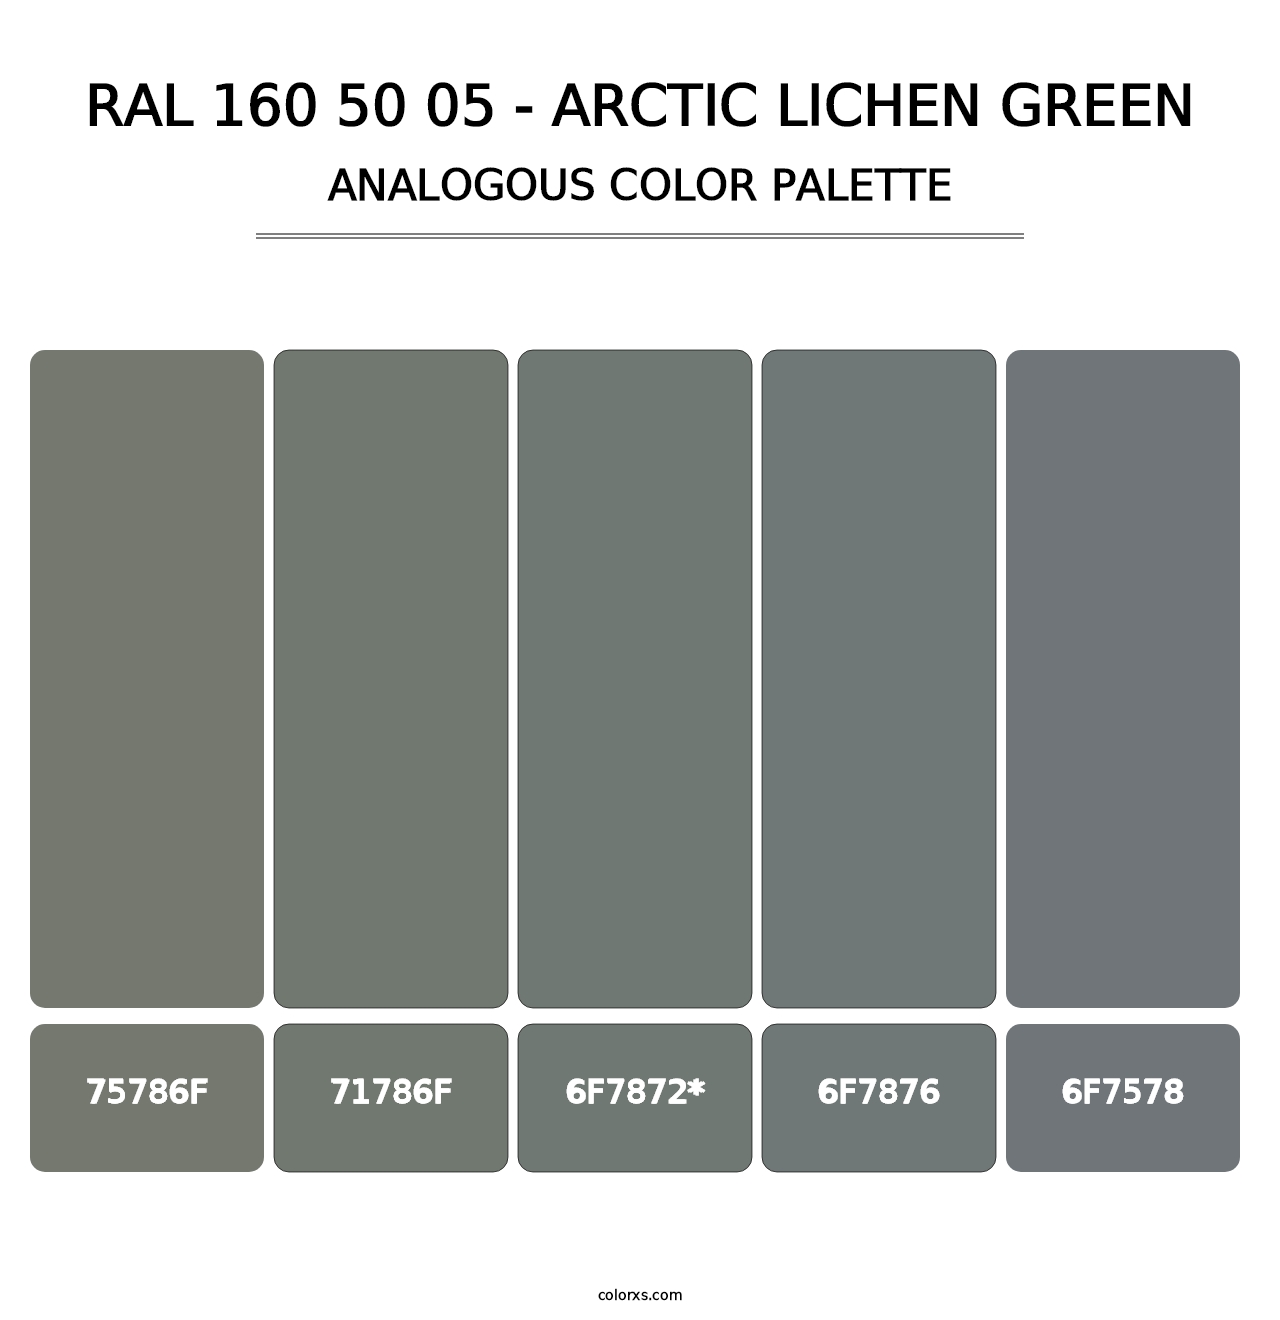 RAL 160 50 05 - Arctic Lichen Green - Analogous Color Palette